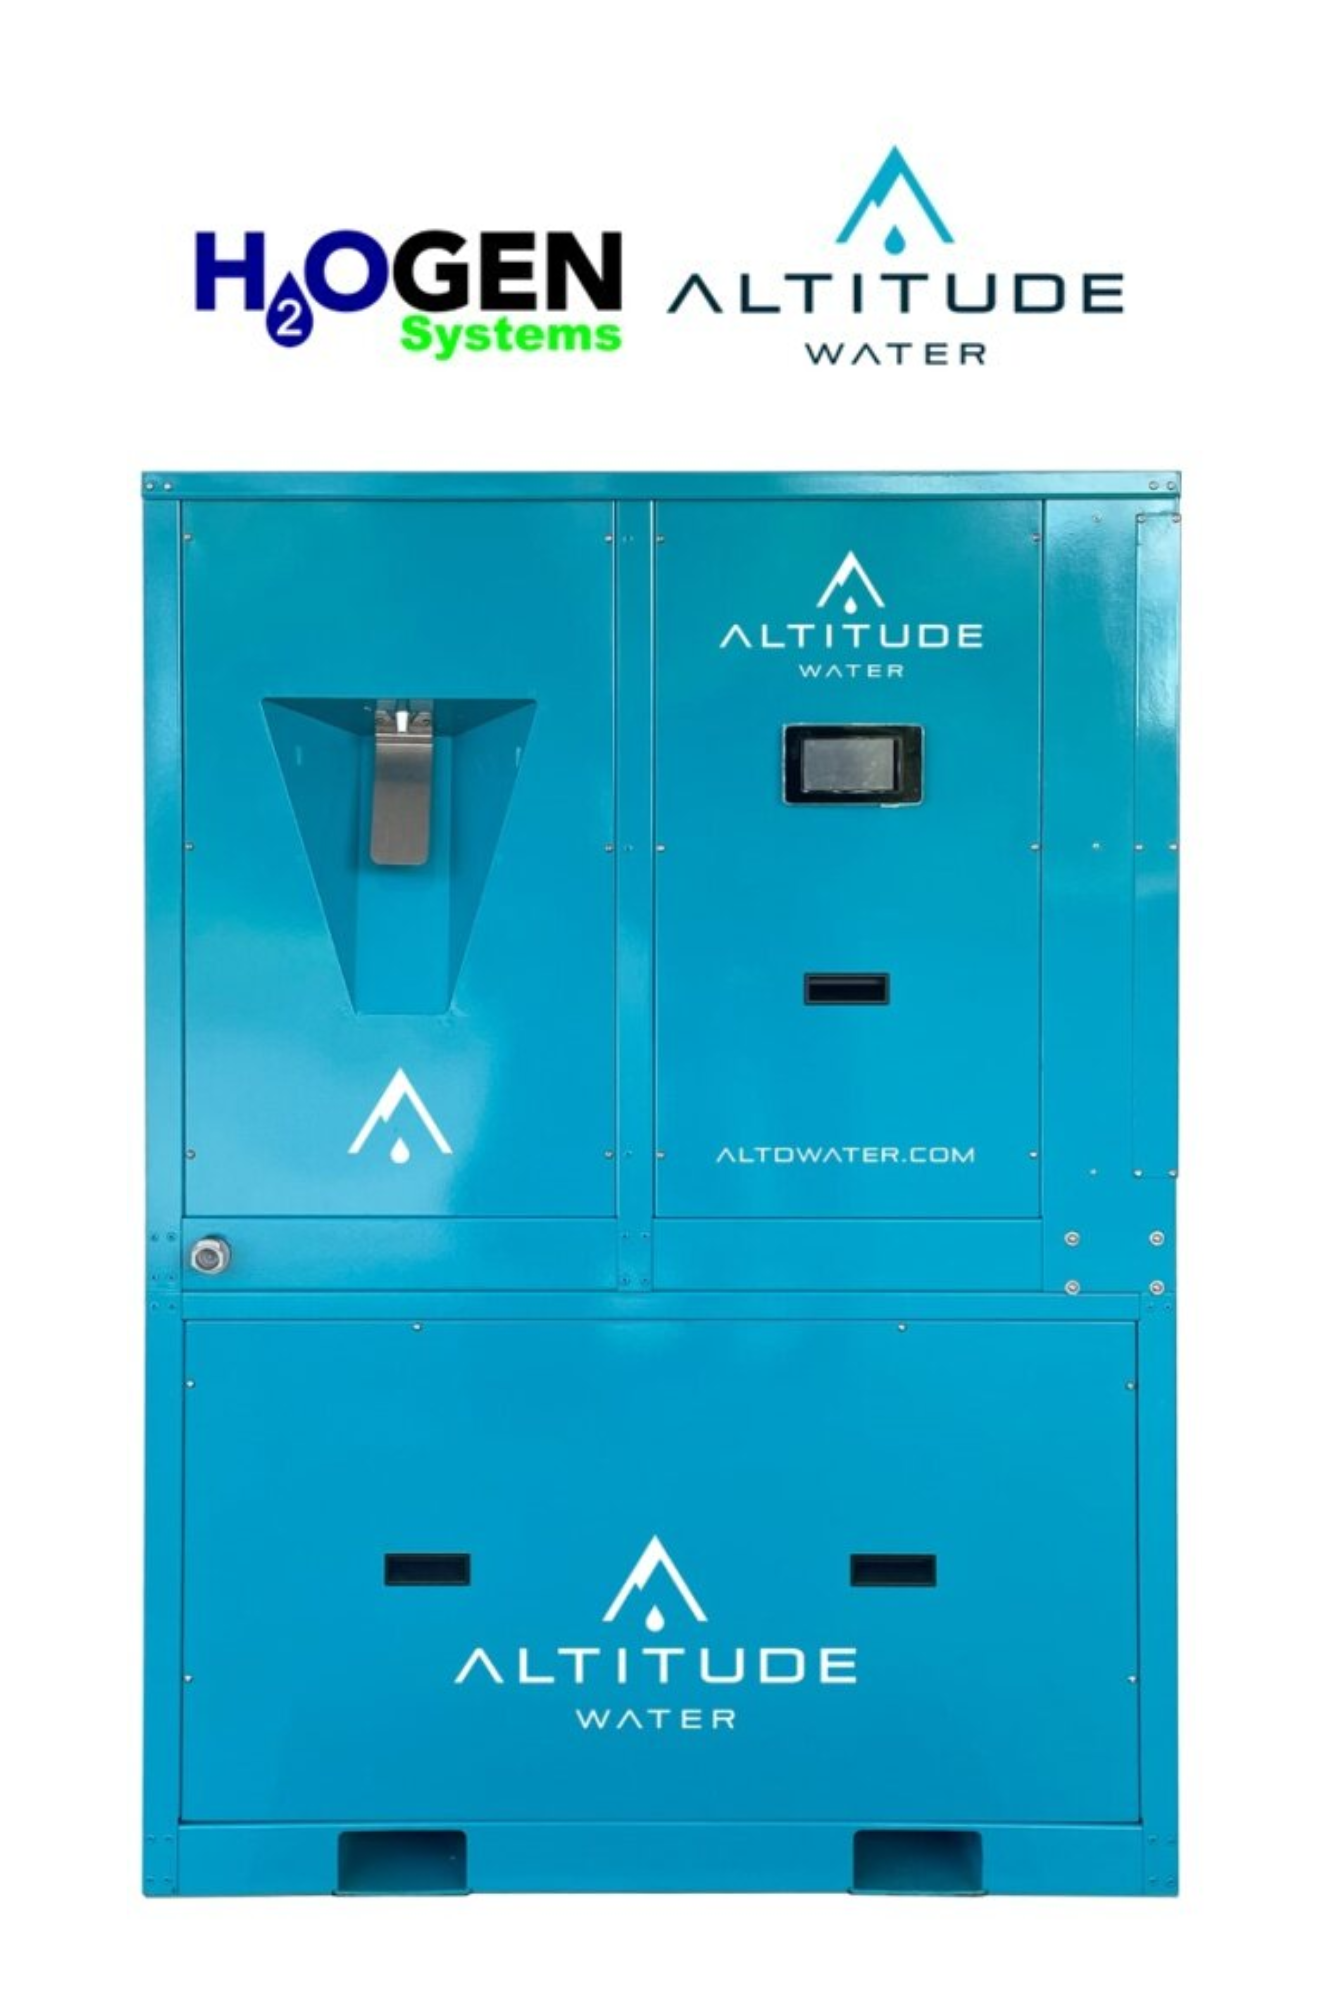 Hogen Systems & Altitude Water Forge Strategic Alliance - Hogen Systems